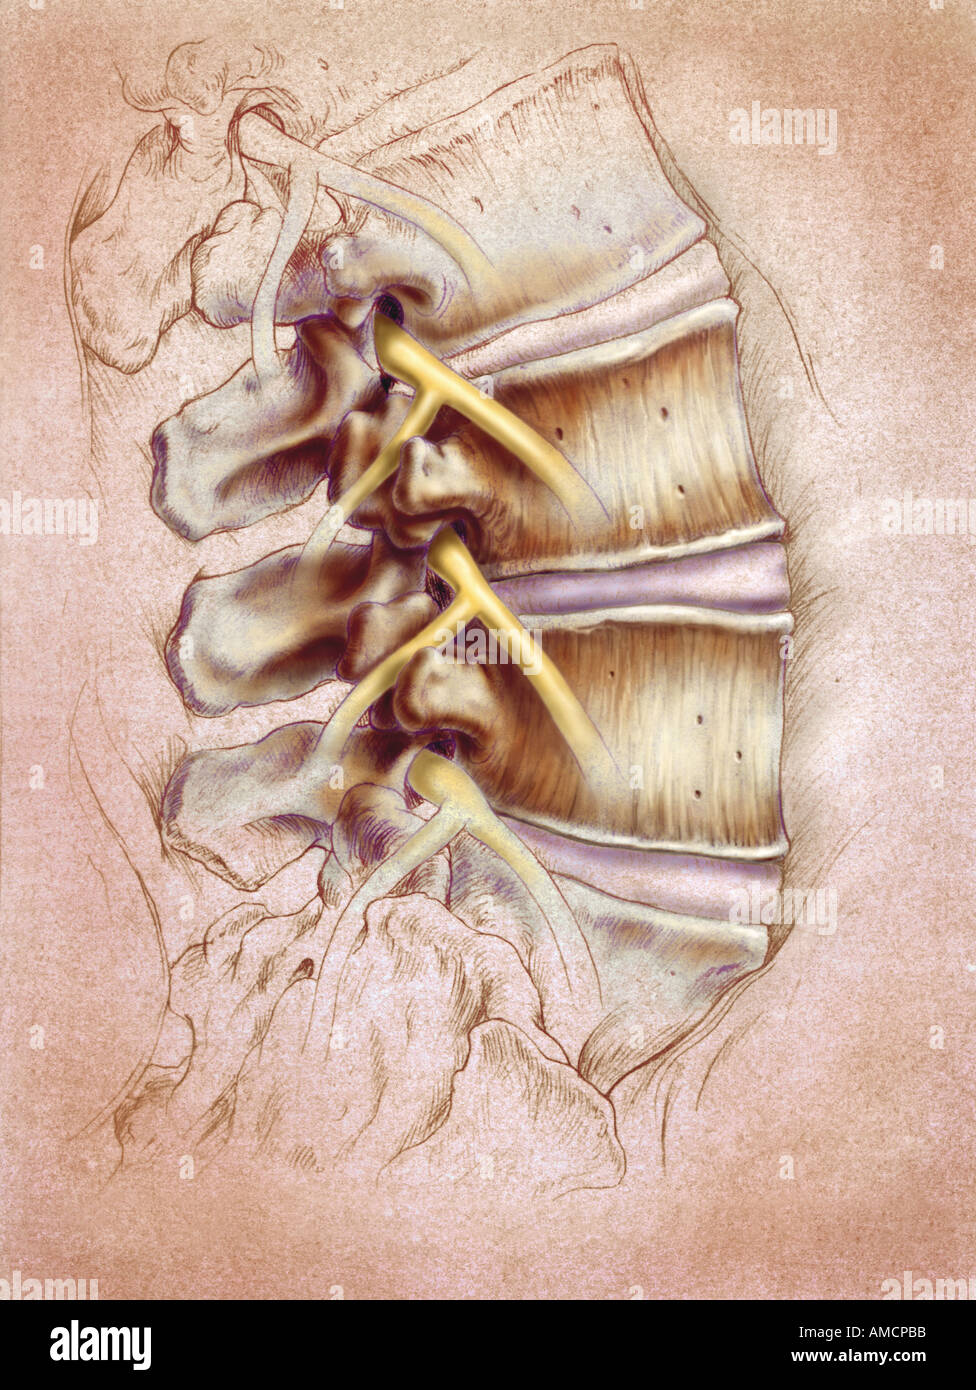 Illustration - spine Stock Photo